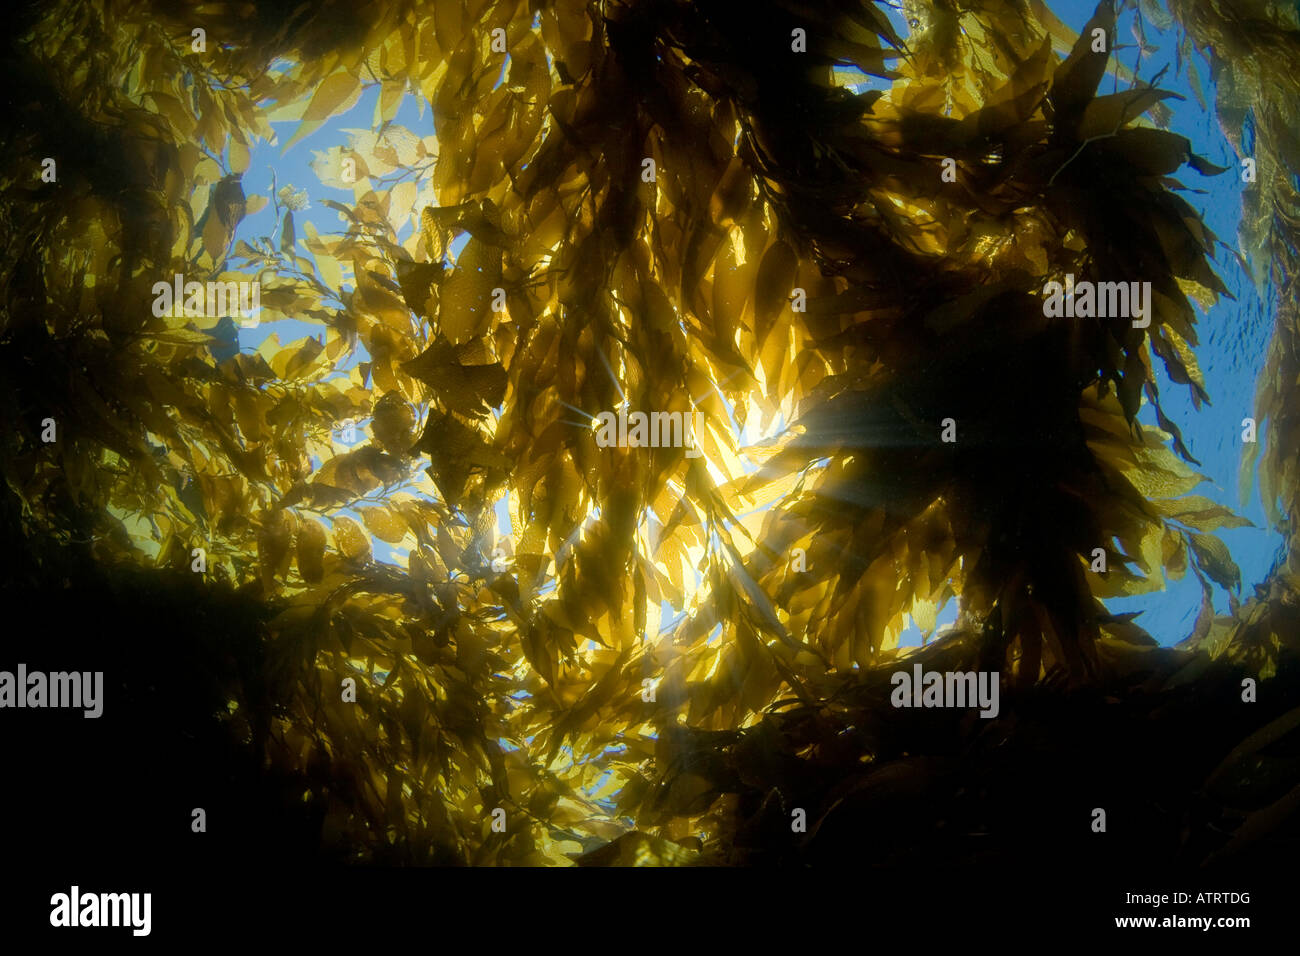 Sunlight streaming through a forest of giant kelp, Macrocystis pyrifera, off Catalina Island, California, USA. Stock Photo